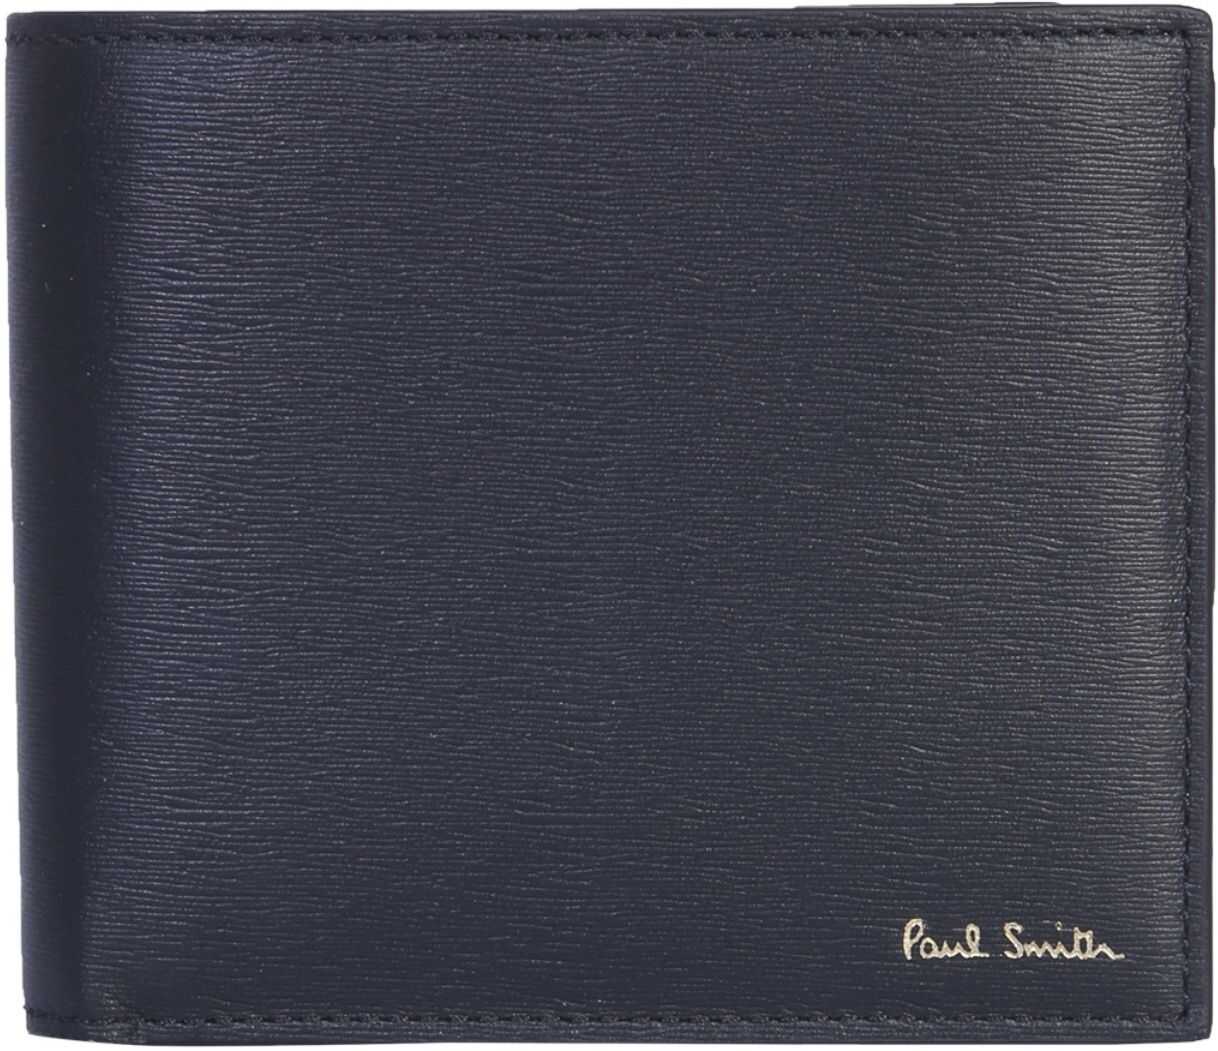 Paul Smith Billfold Wallet BLACK